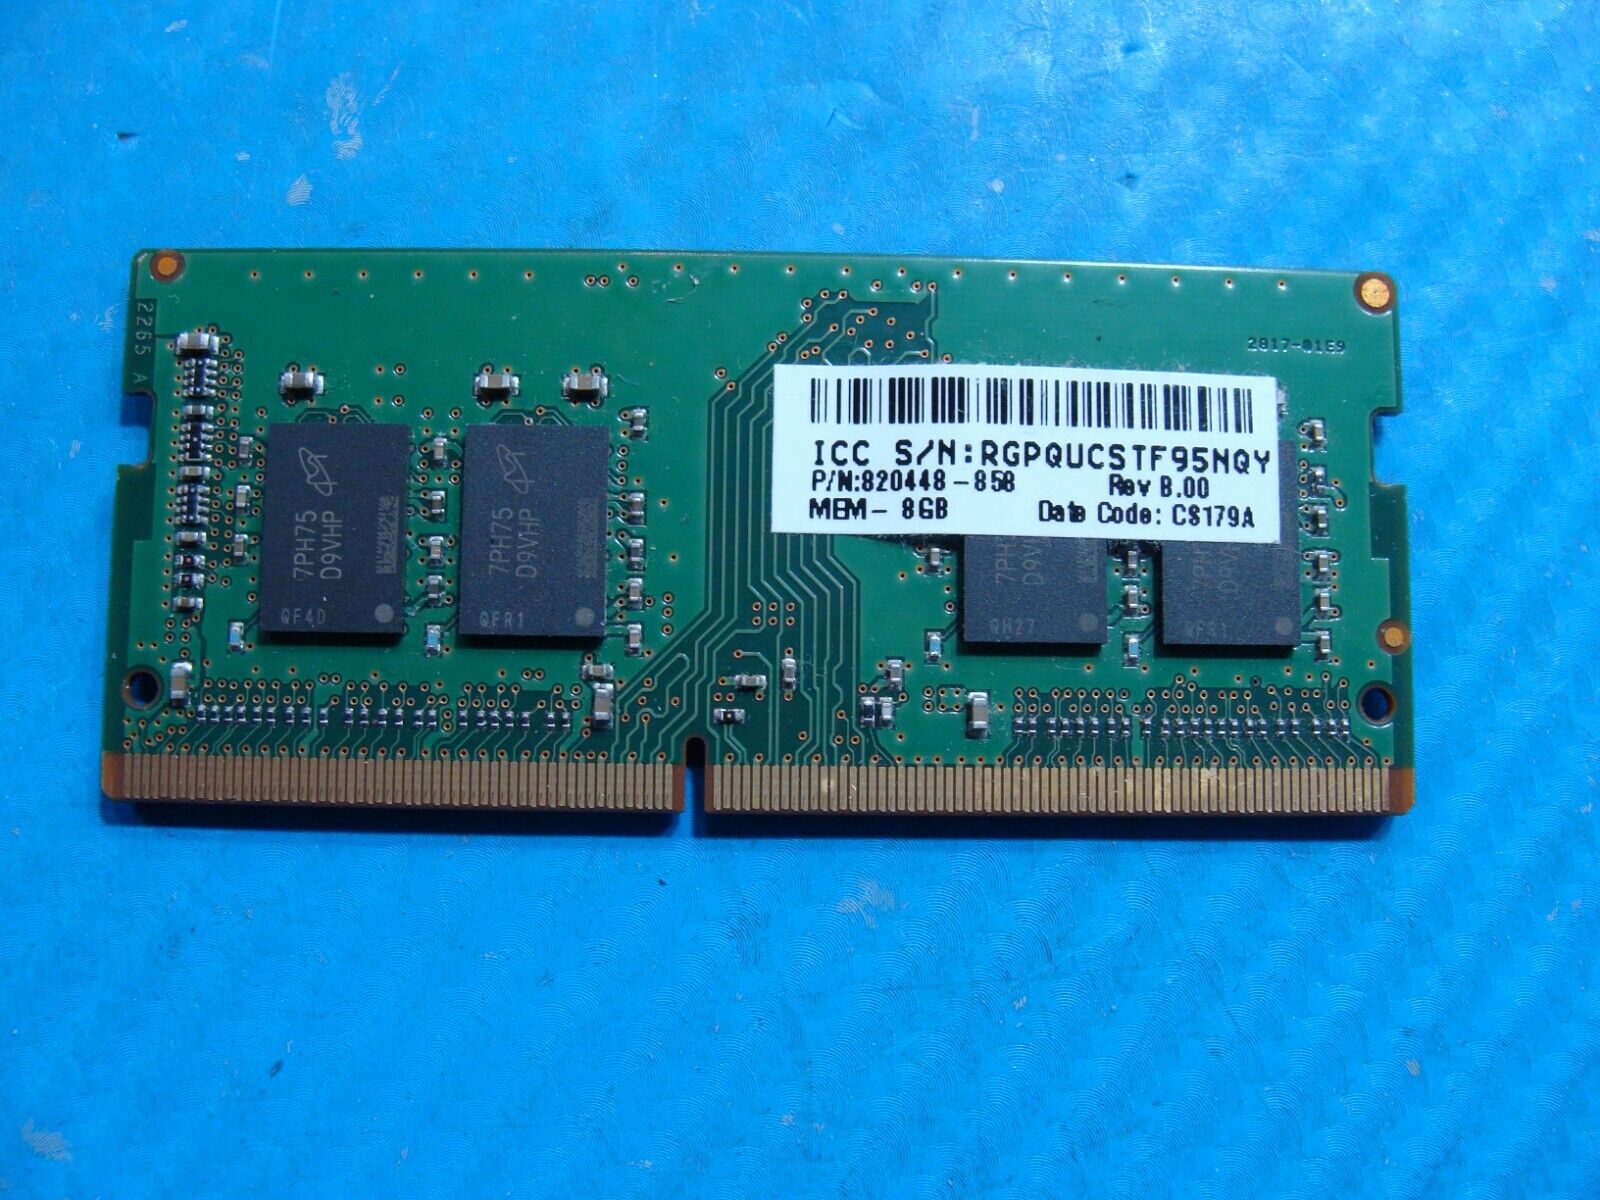 HP 15-as152nr Micron 8GB 1Rx8 PC4-2666V Memory RAM SO-DIMM MTA8ATF1G64HZ-2G6H1